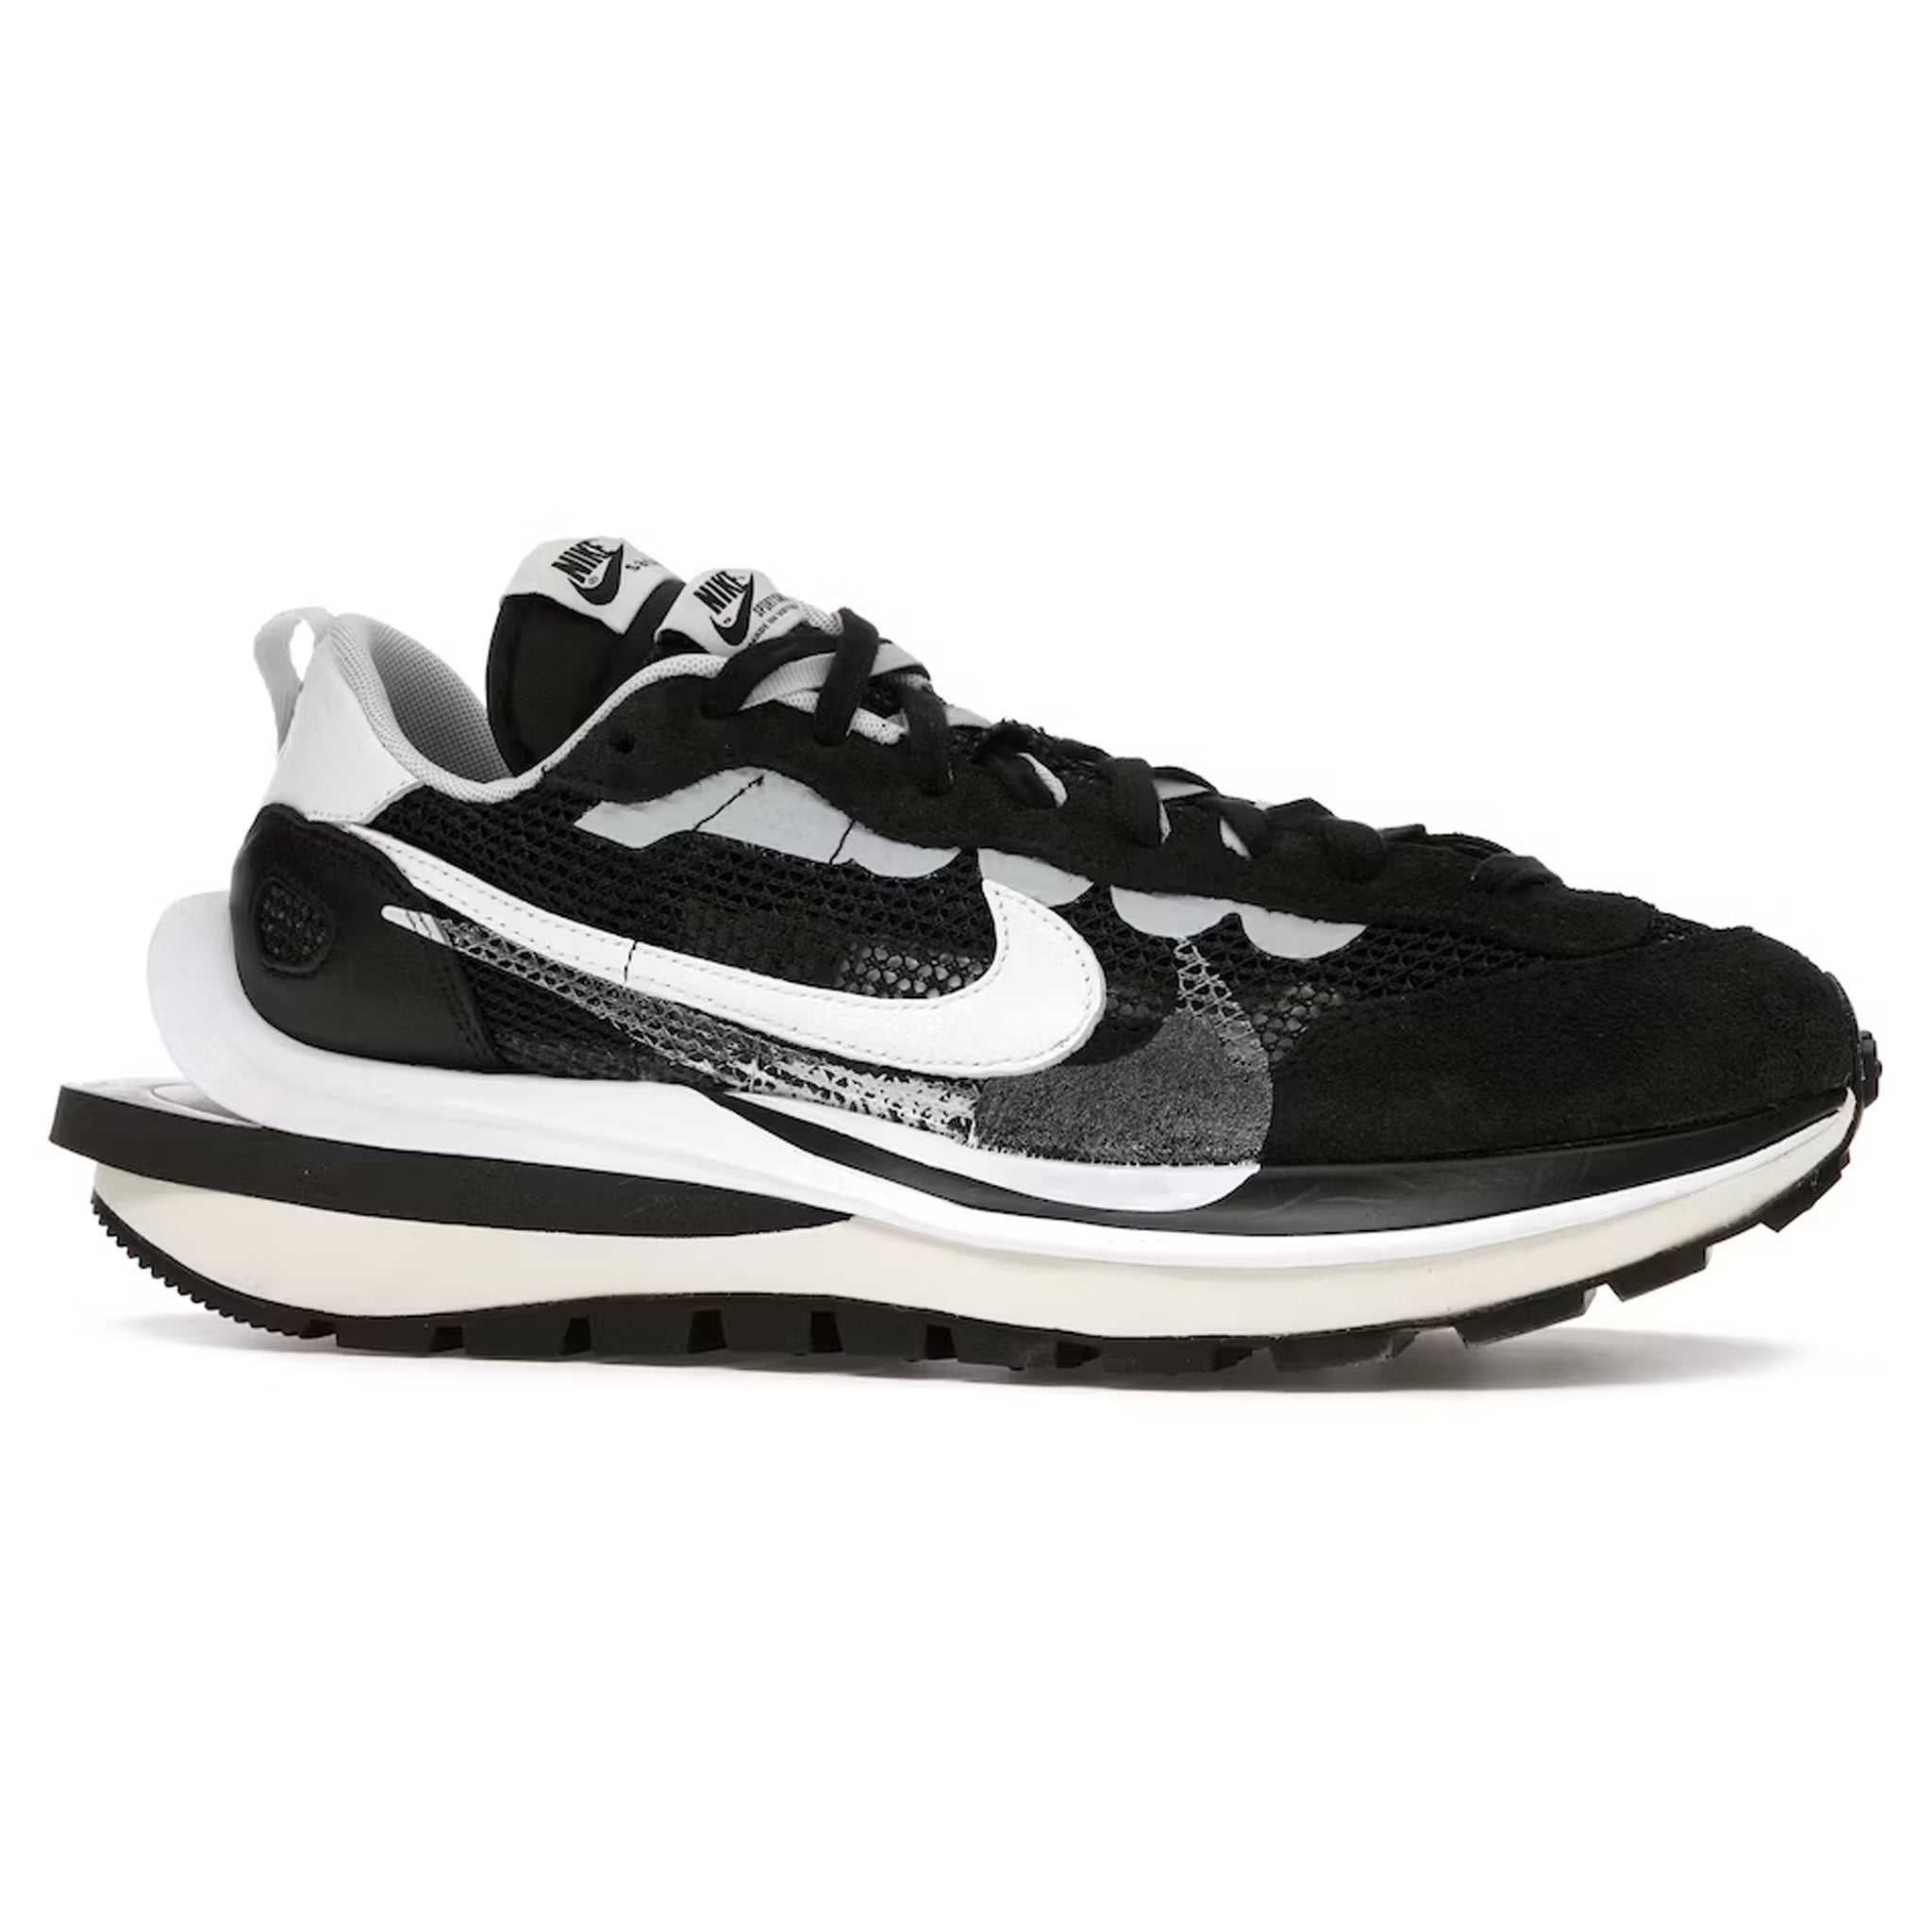 Side view of Nike x Sacai Vaporwaffle Black White Sneaker CV1363-001